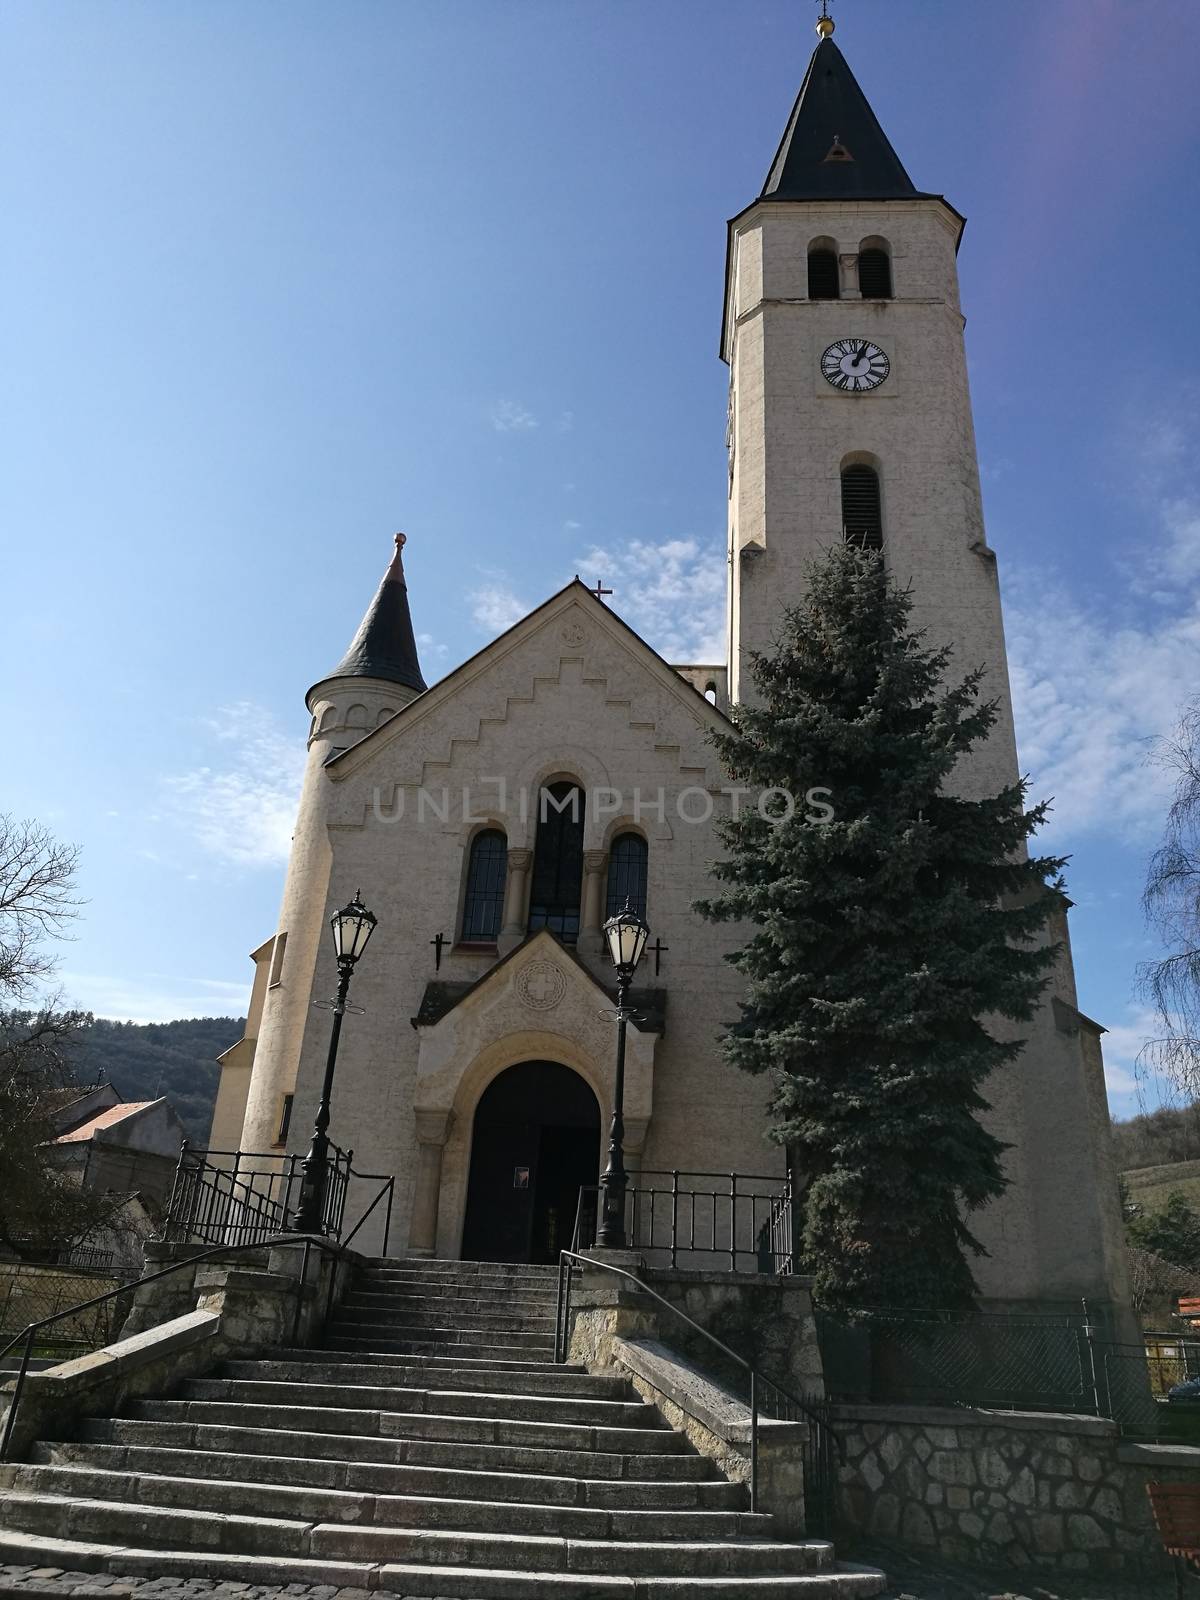 Tokaj church building in the city centre. High quality photo